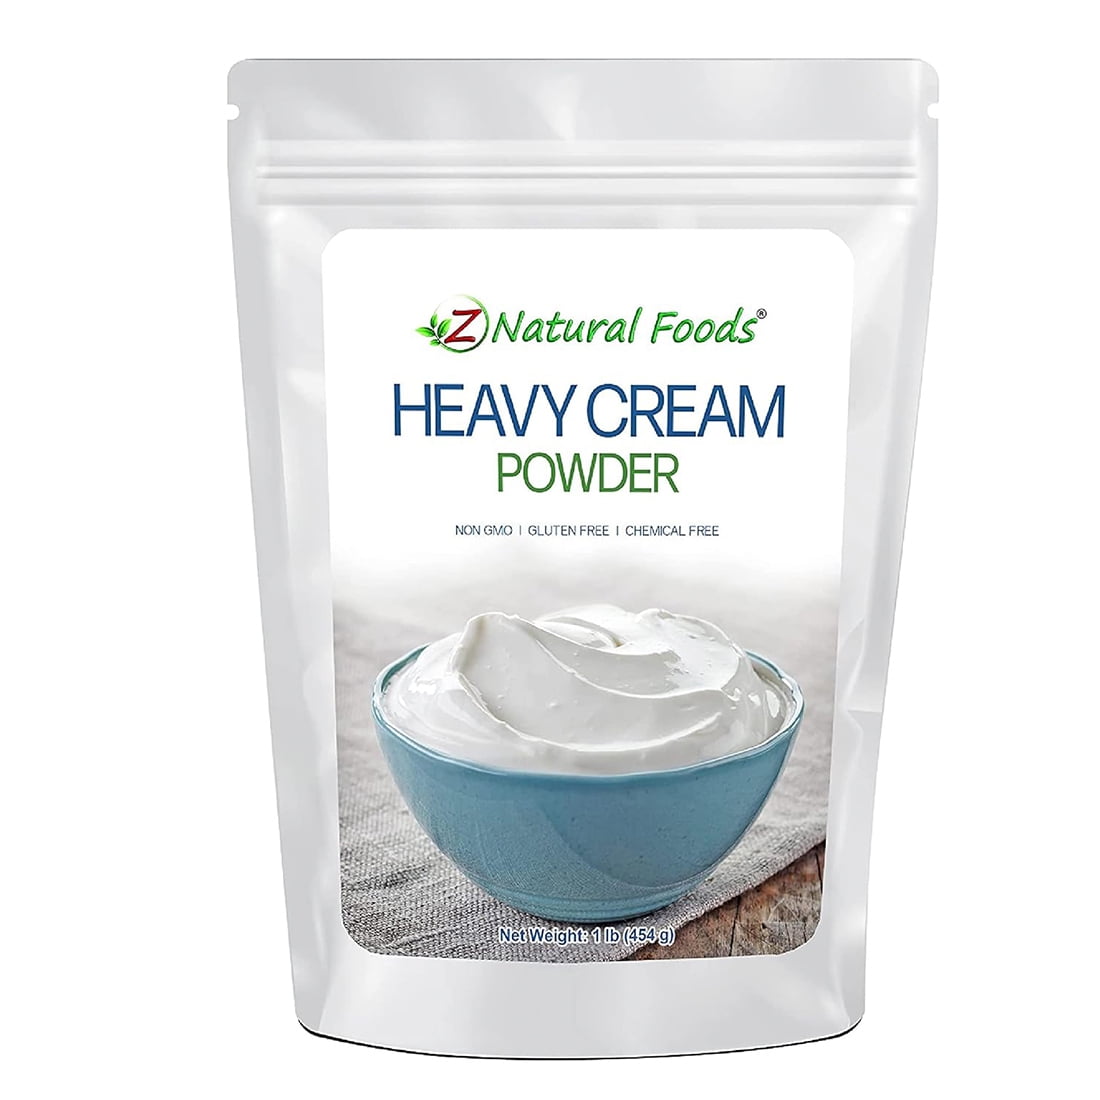 Heavy Cream Powder – Judee's Gluten Free